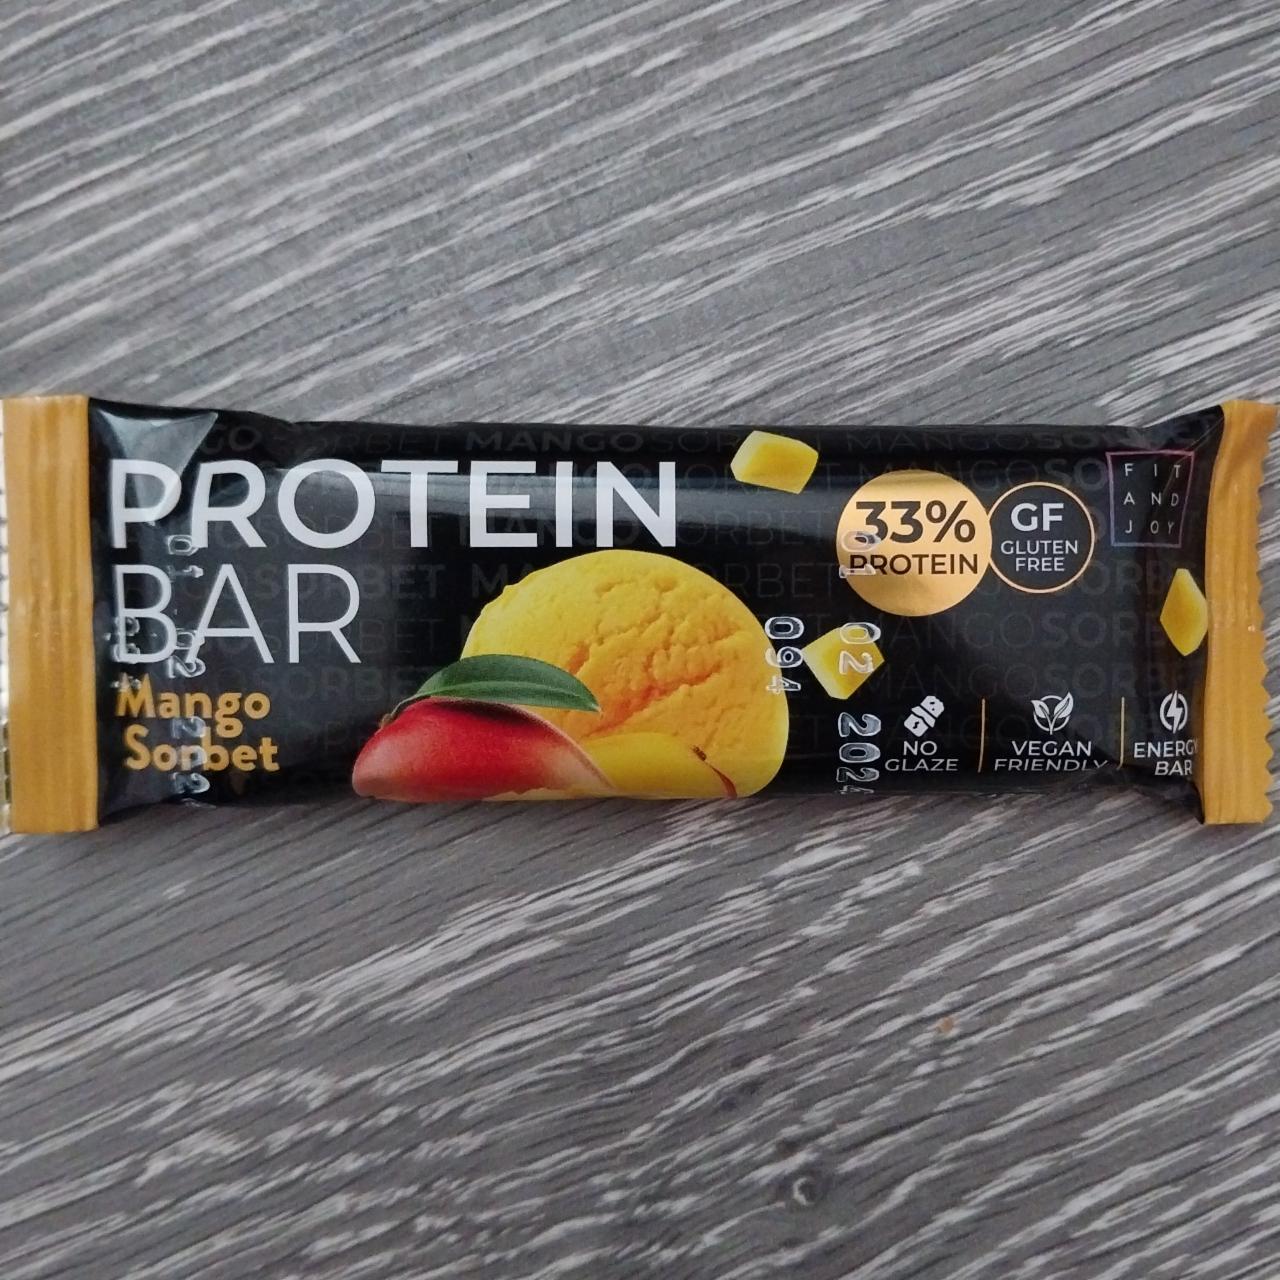 Фото - Protein bar mango Sorbet Fit and Joy